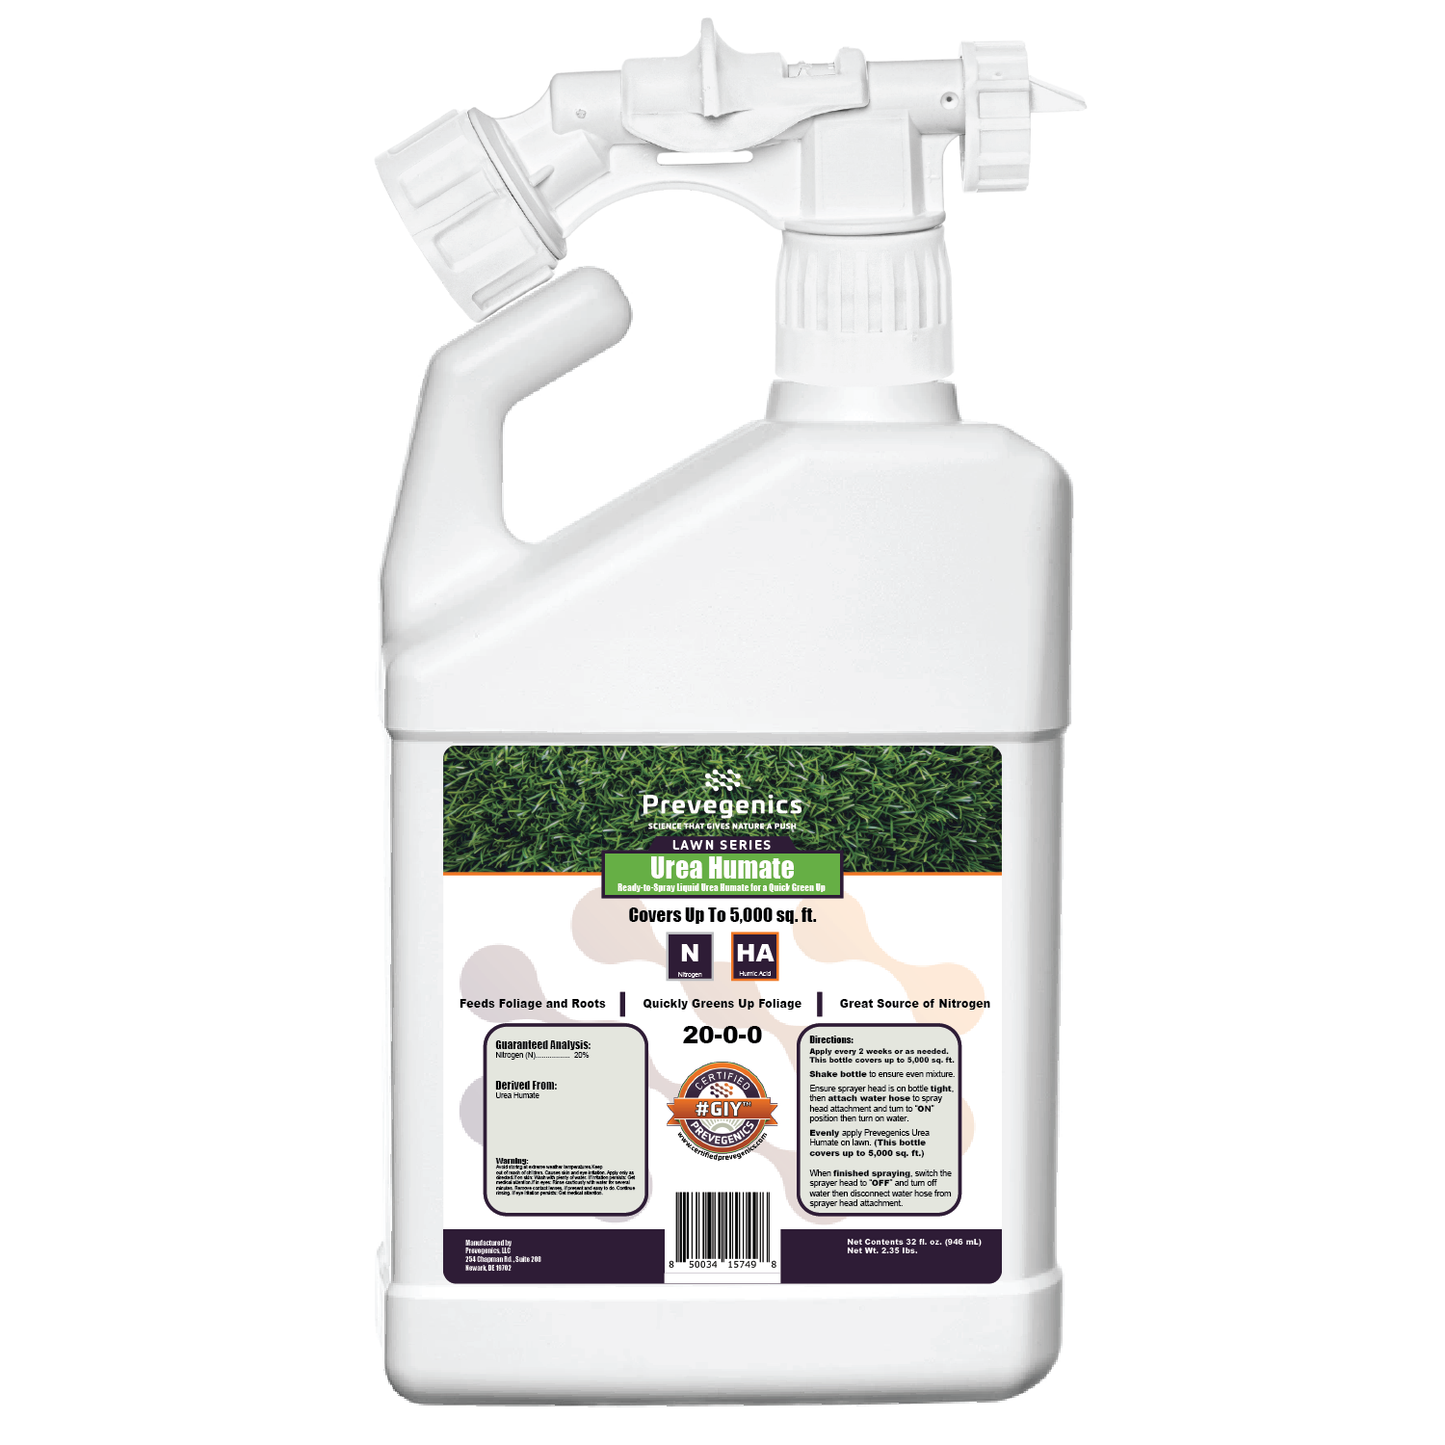 Ready-to-Spray Urea Humate Liquid Fertilizer